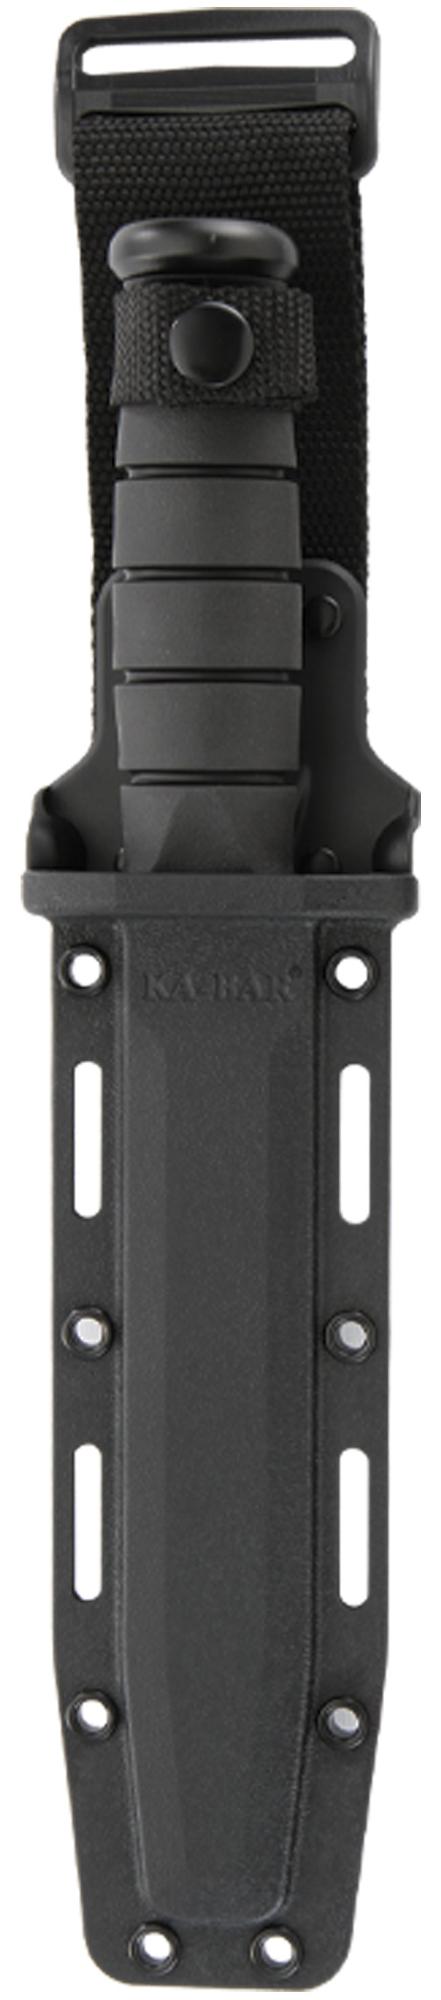 Ka-Bar Full Size Black Fighting / Utility Fixed Blade Knife 1095 Steel